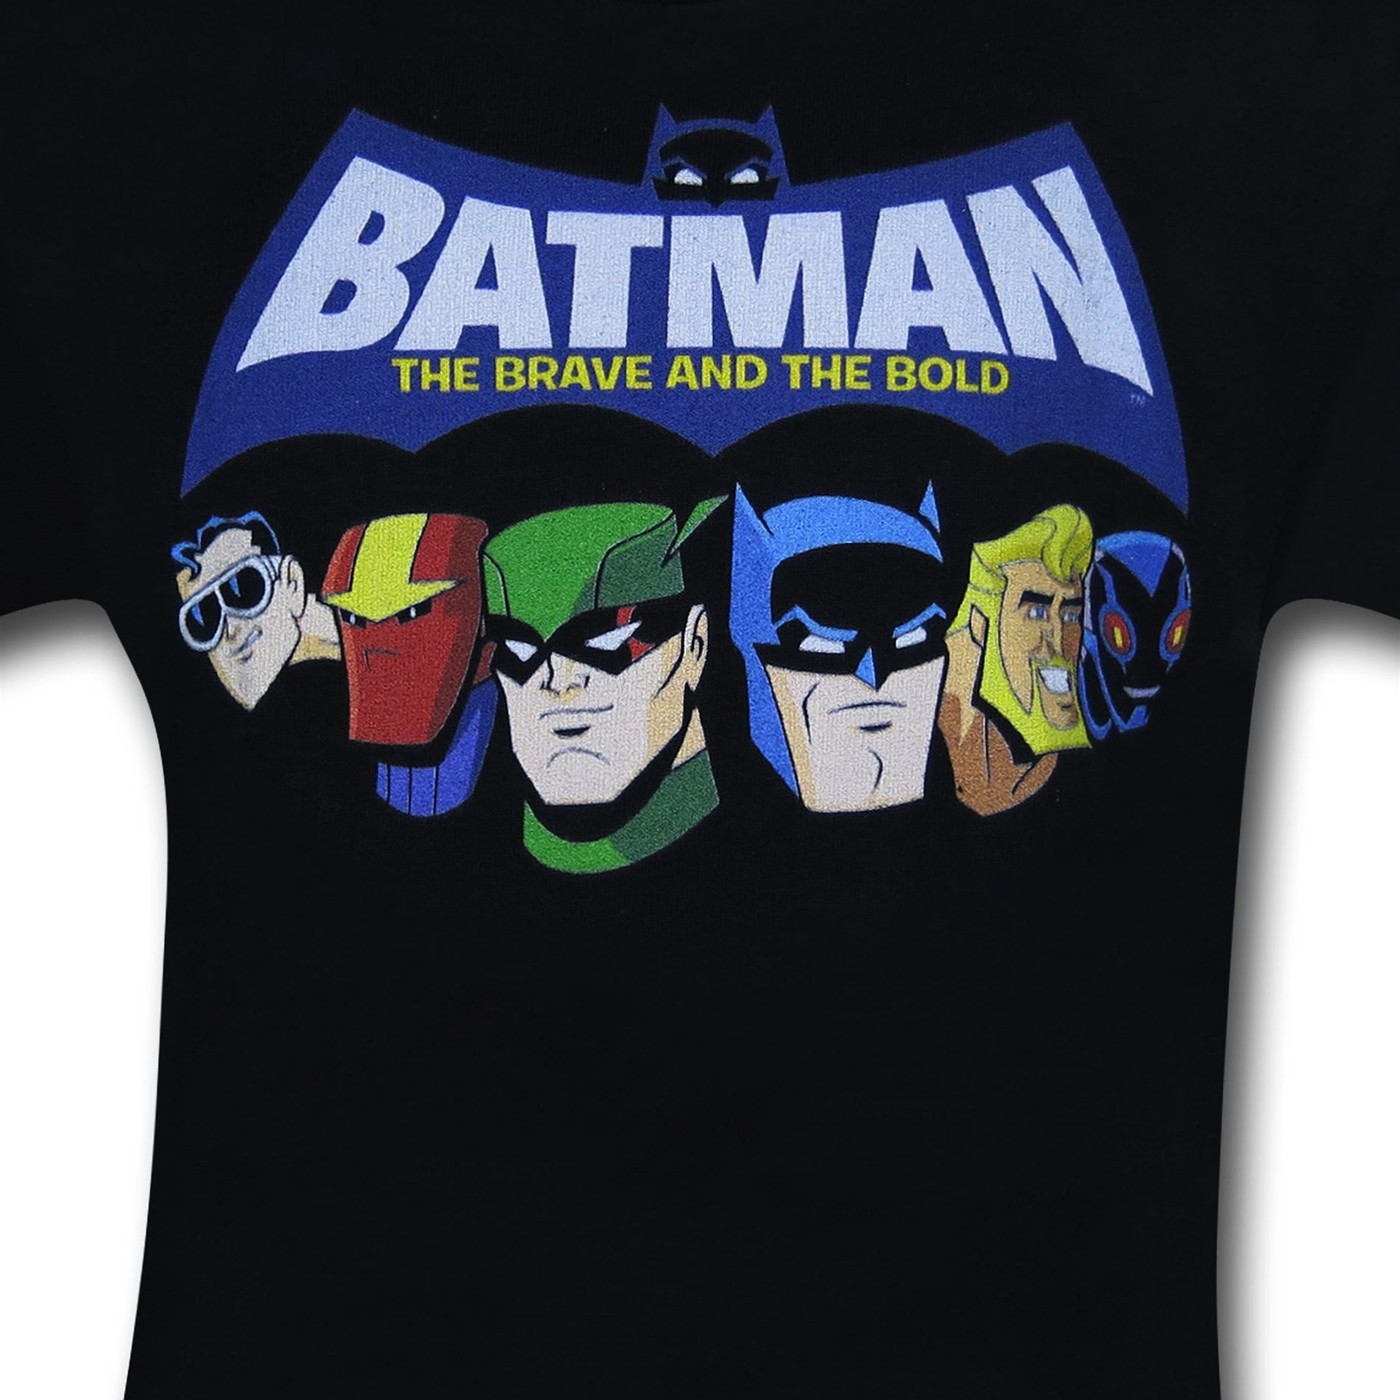 BATMAN ROBIN LOGO Graphic Tee Shirt Licensed Boys Kids 2T 3T 4T 4 5-6 7 